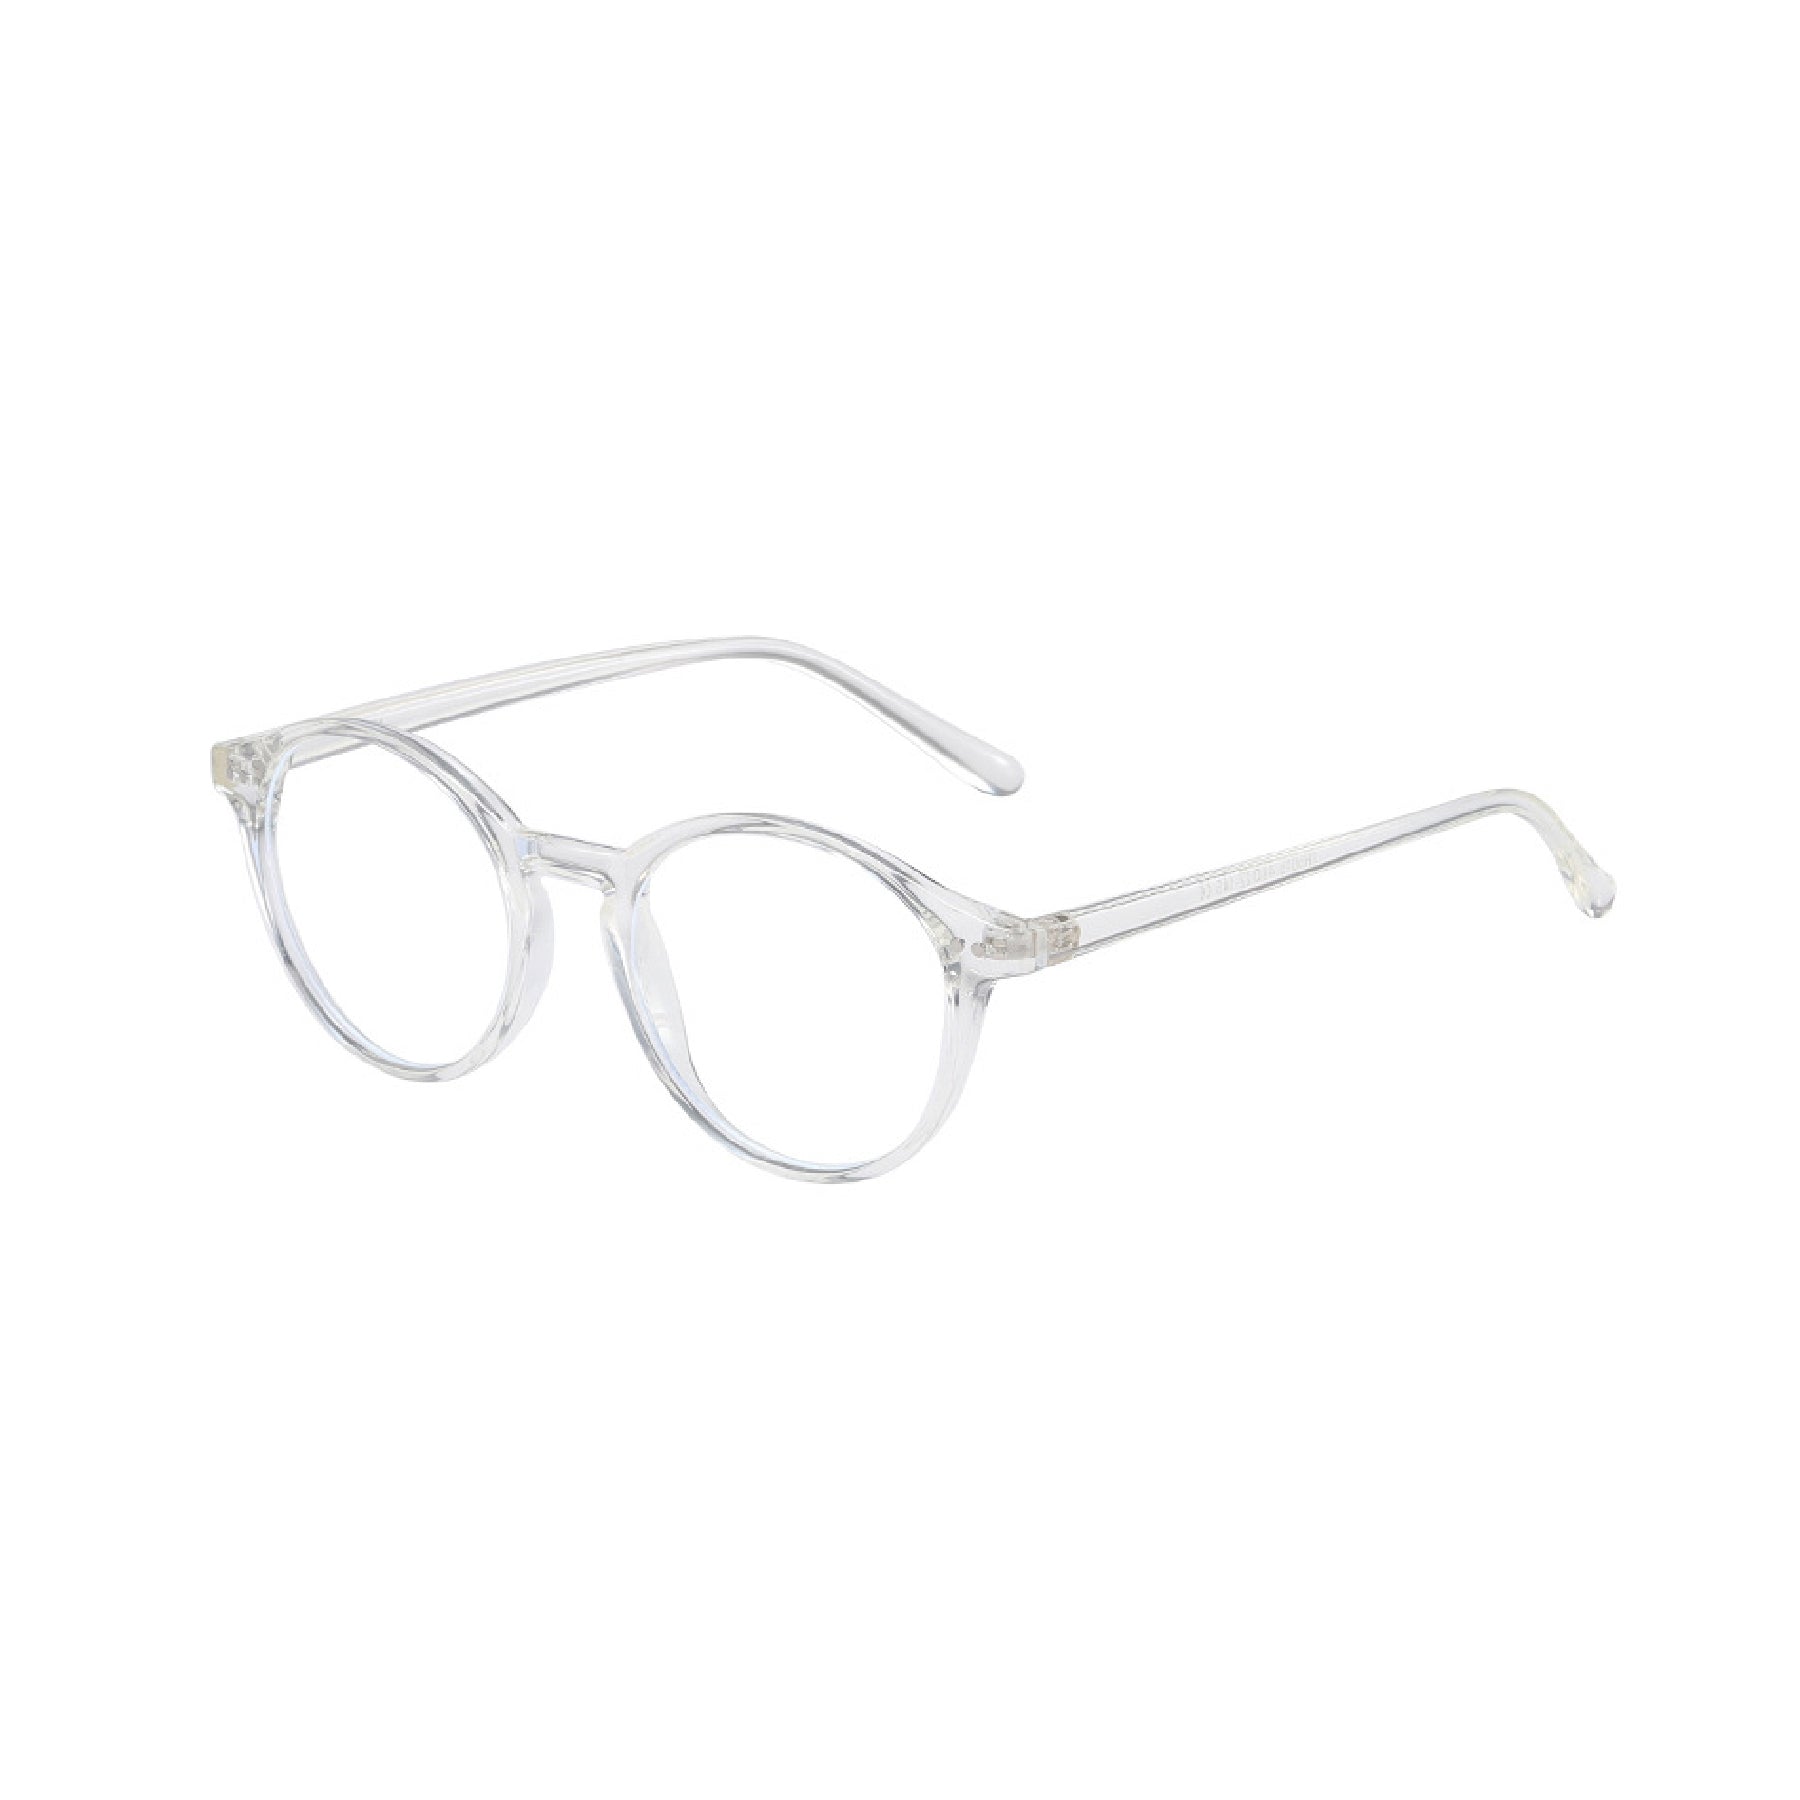 Nomad Blue Ray Eyeglasses (UV 400 Protection)